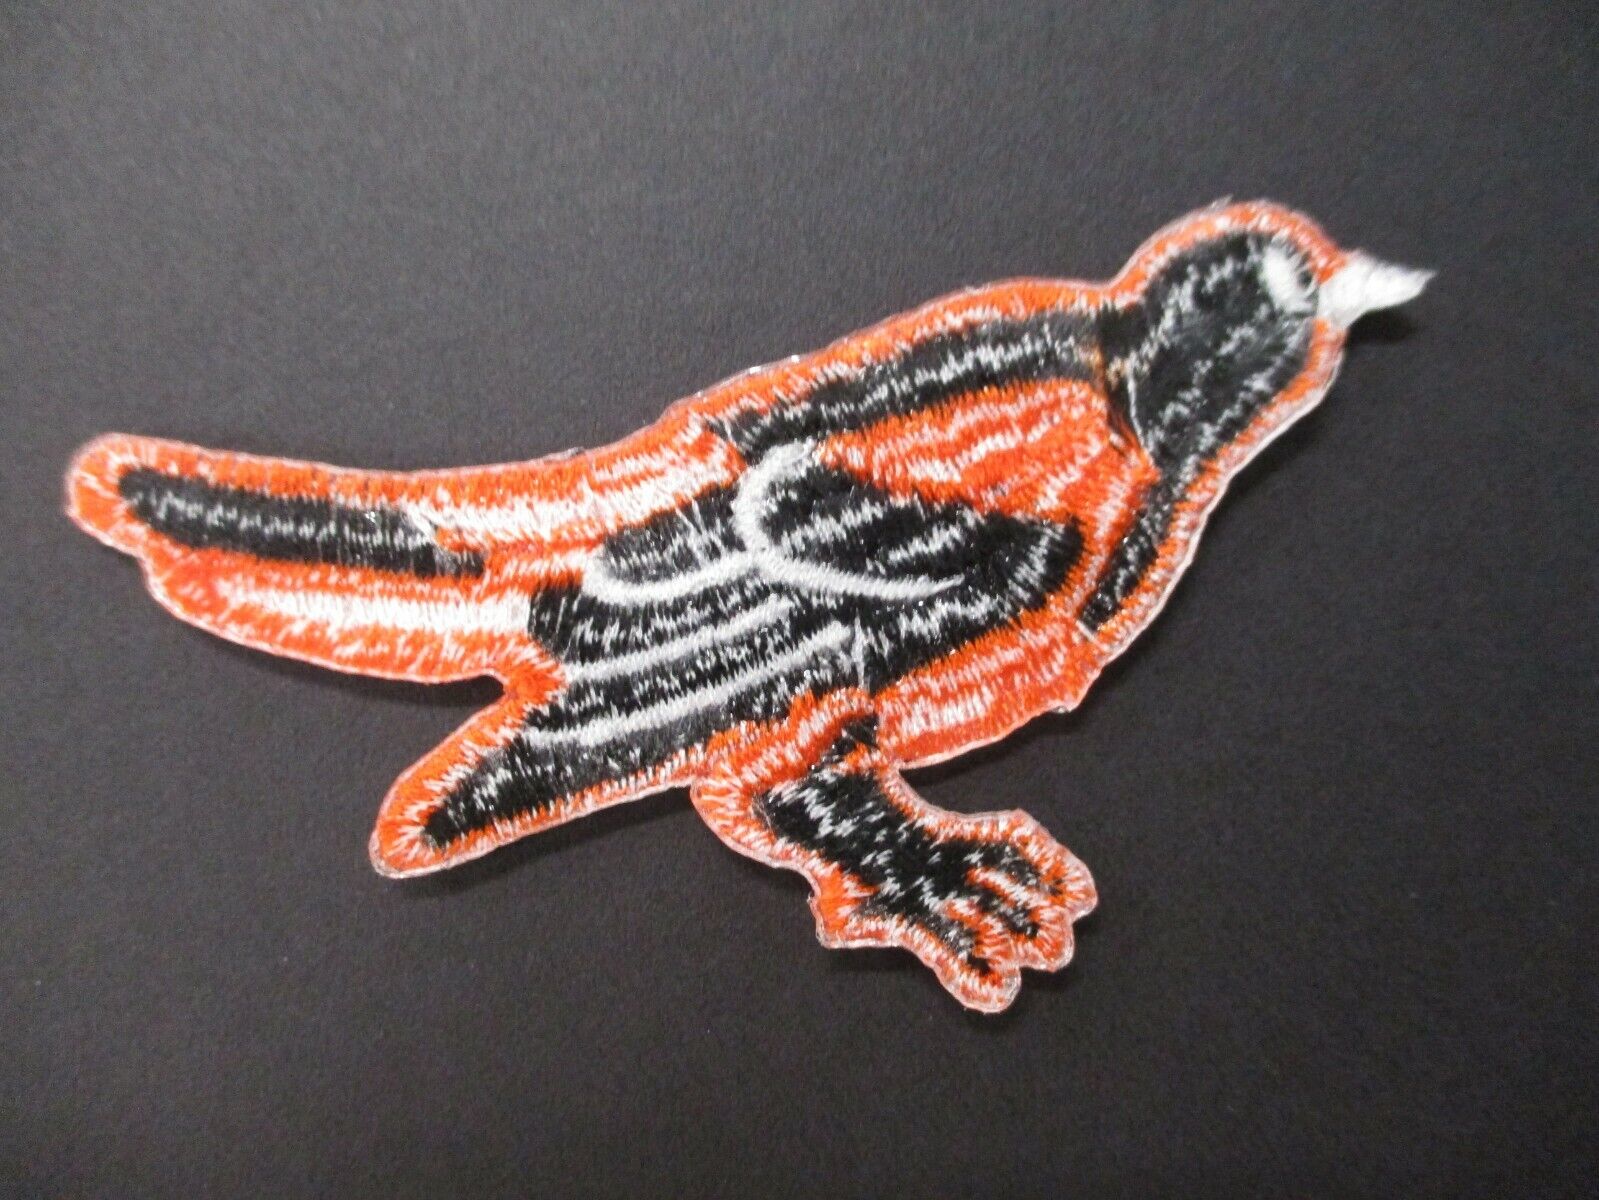 Baltimore Orioles Oriole (Bird) Patch Logo Size 1.75 x 3.25 inches